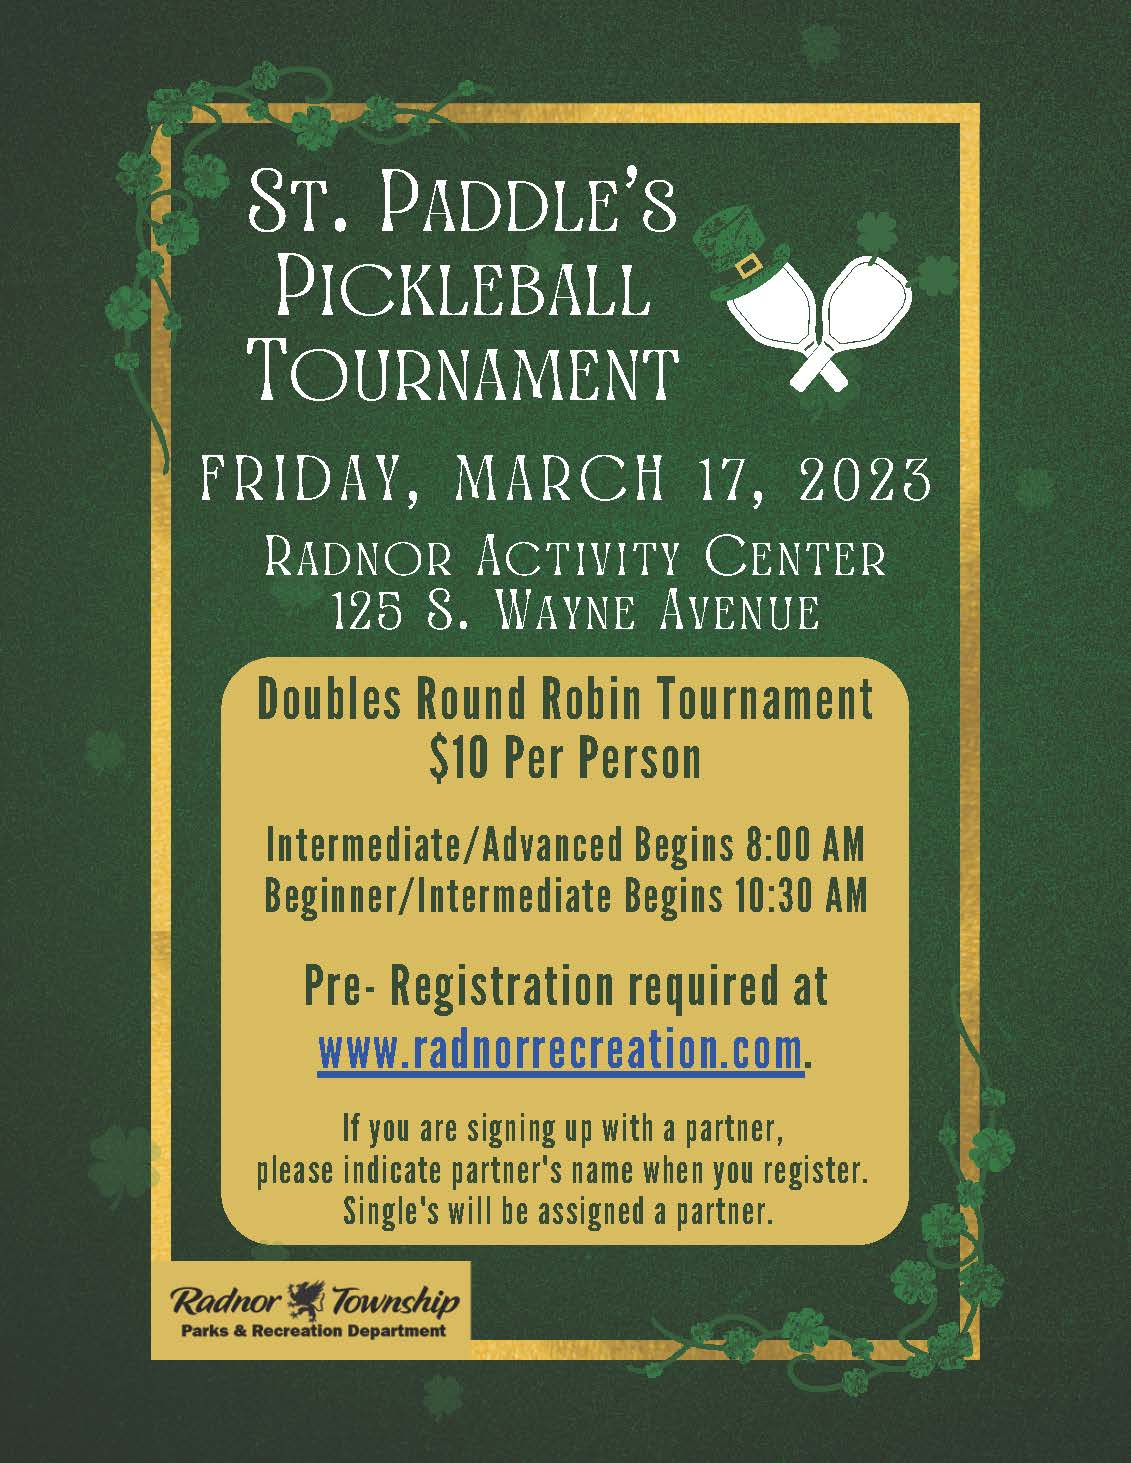 St. Paddle's Pickleball Tournament Flyer 2023.